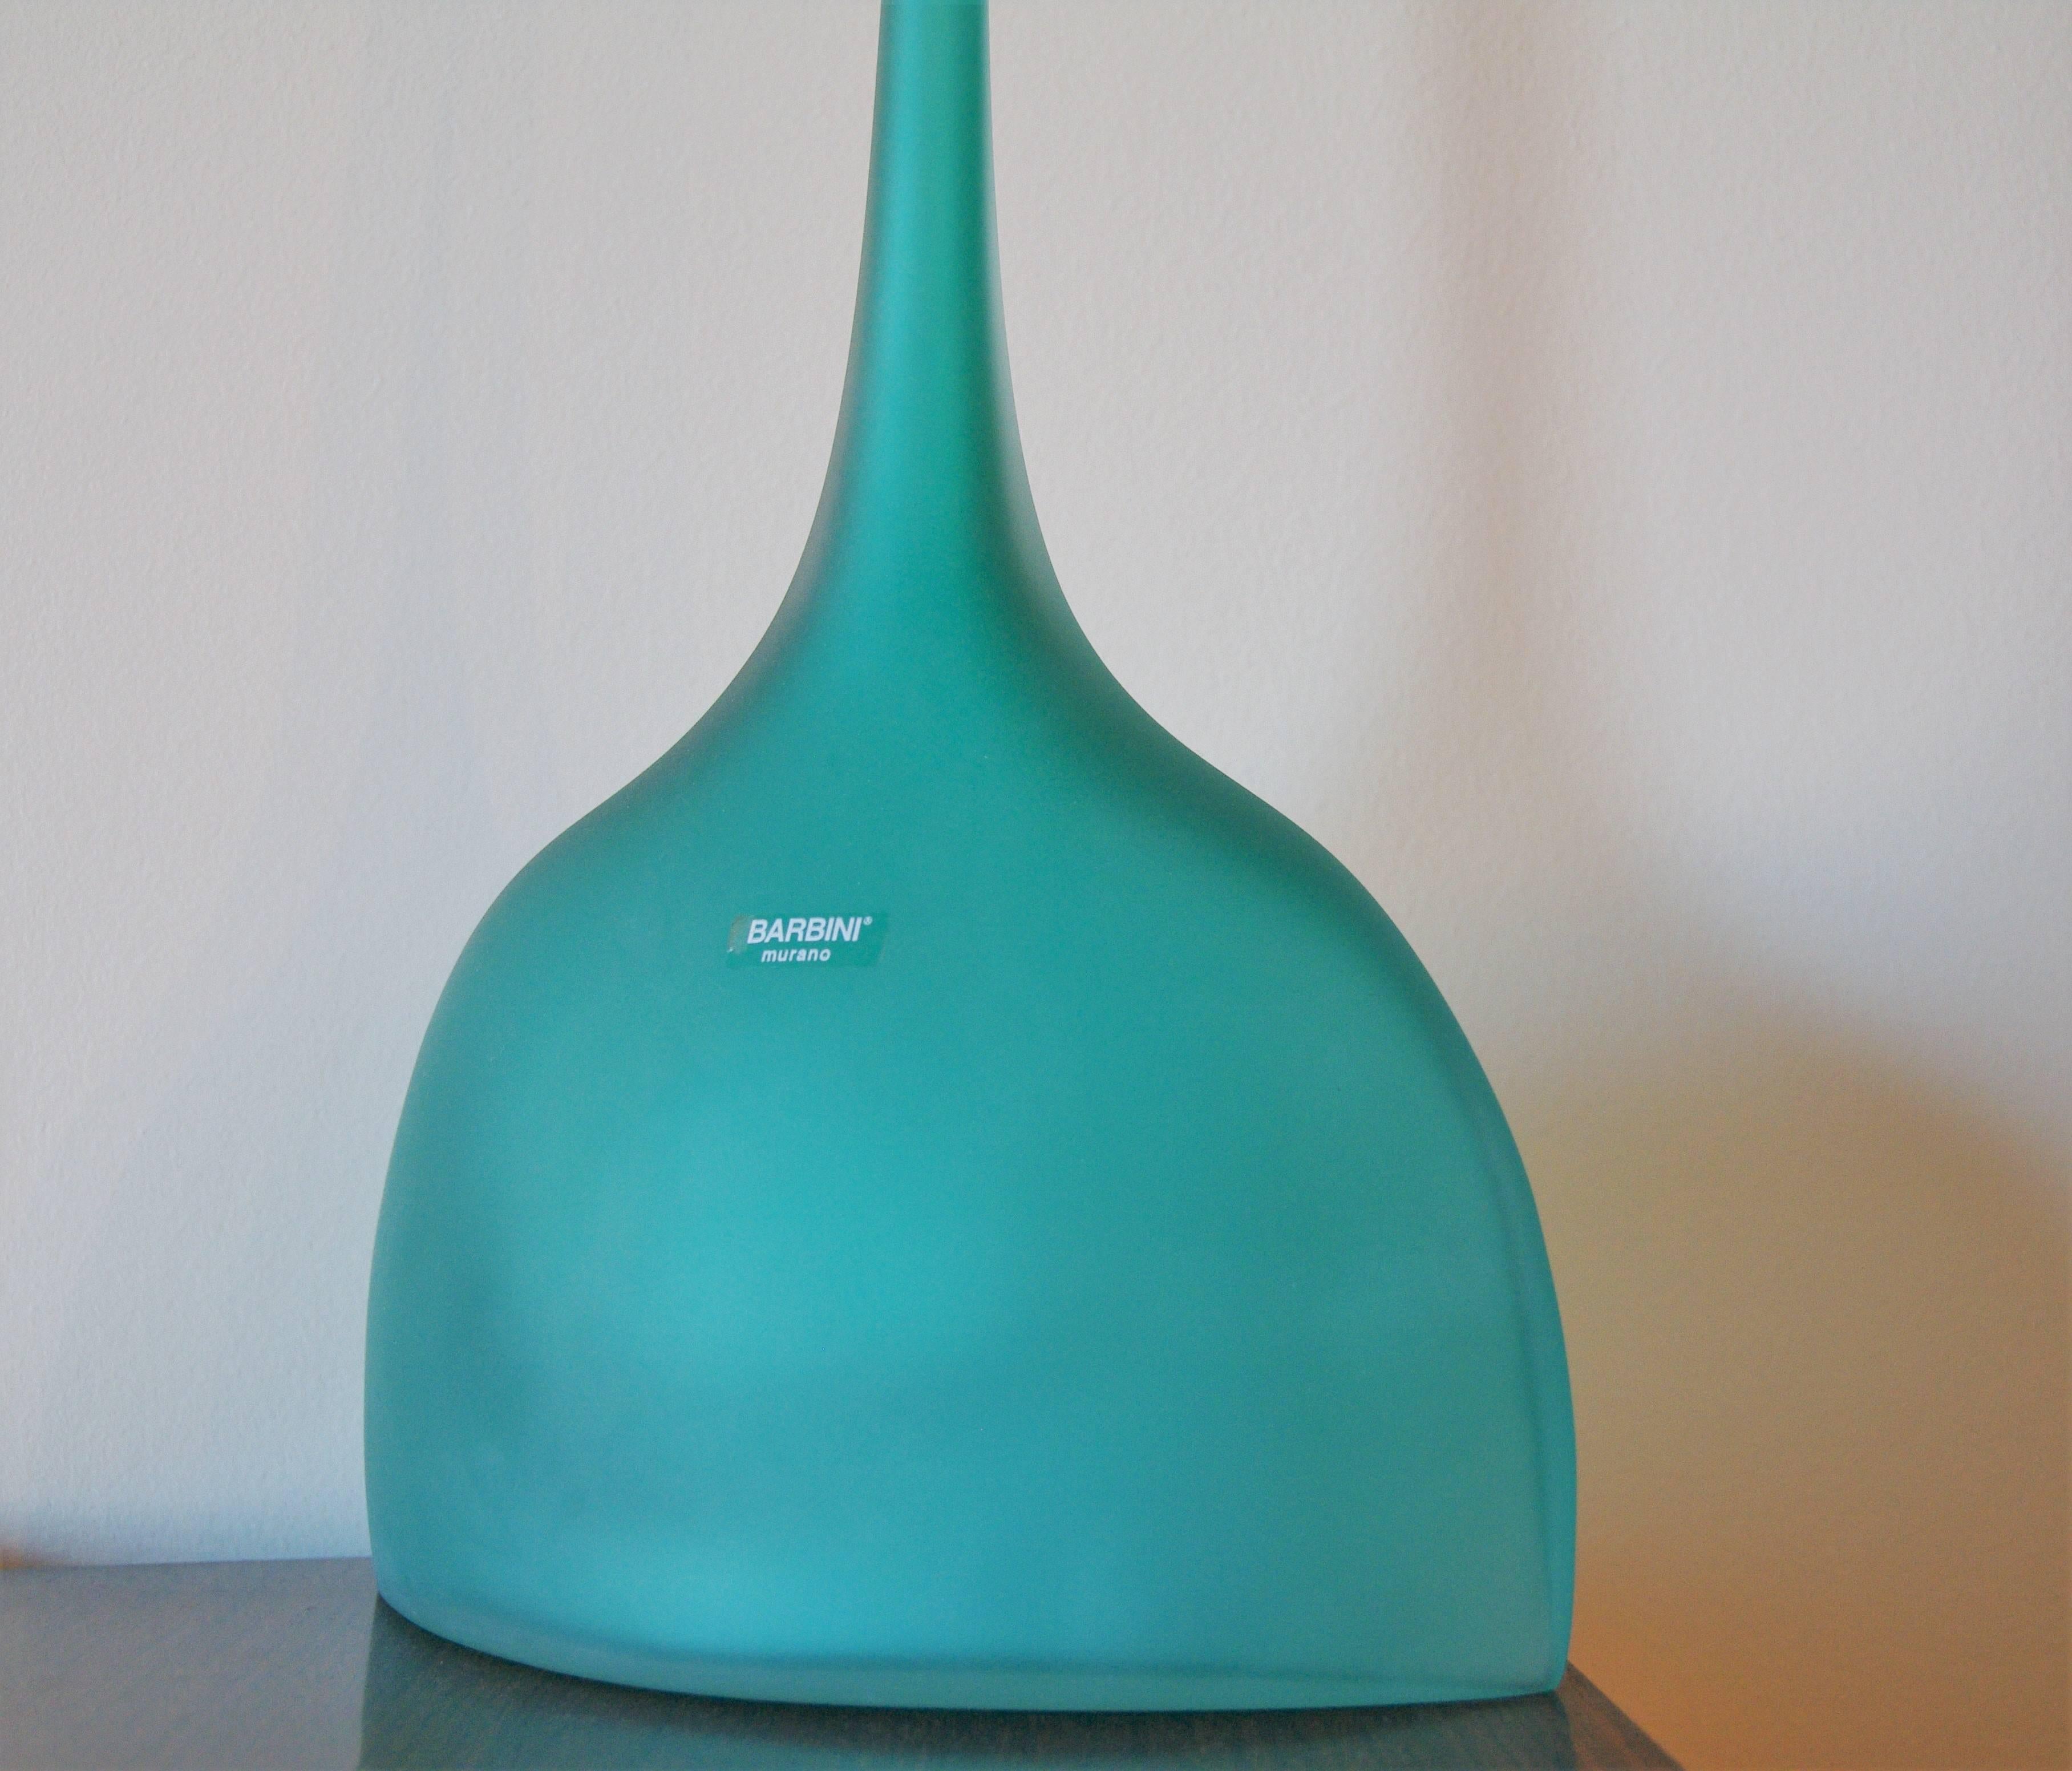 Vintage Barbini Murano fluke glass vase, circa 2000s. Turquoise color, size width 10